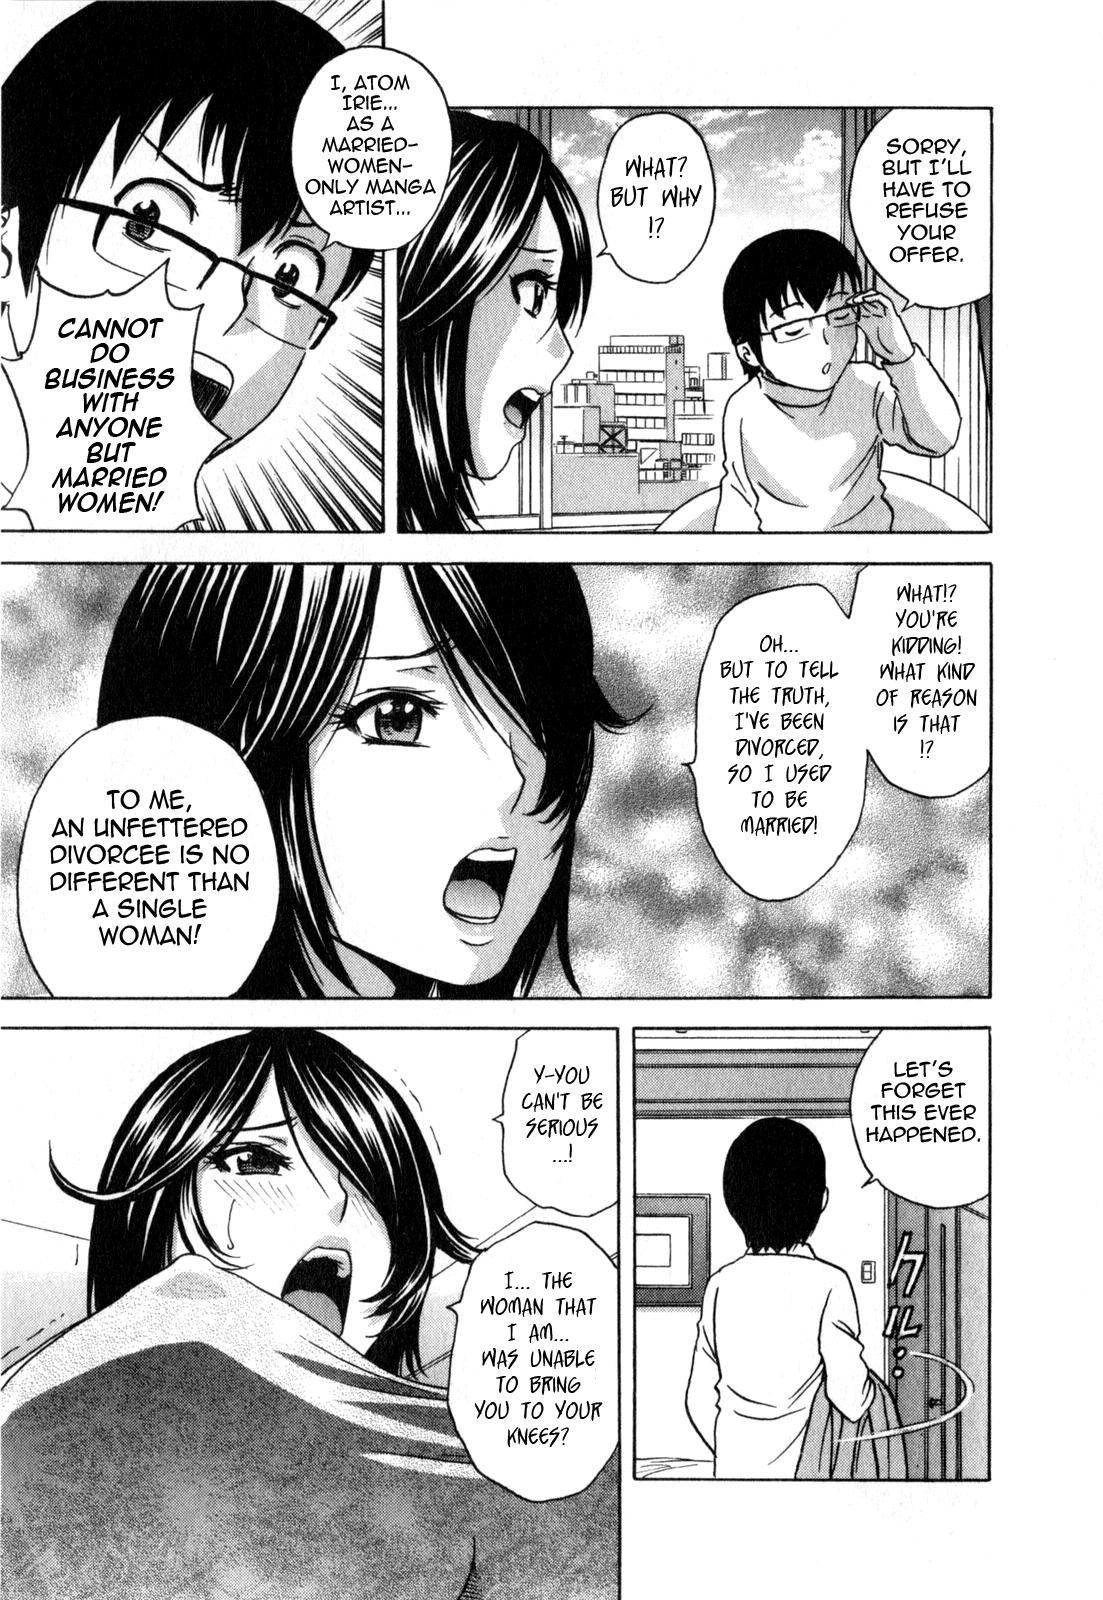 [Hidemaru] Life with Married Women Just Like a Manga 3 - Ch. 1-5 [English] {Tadanohito} 52